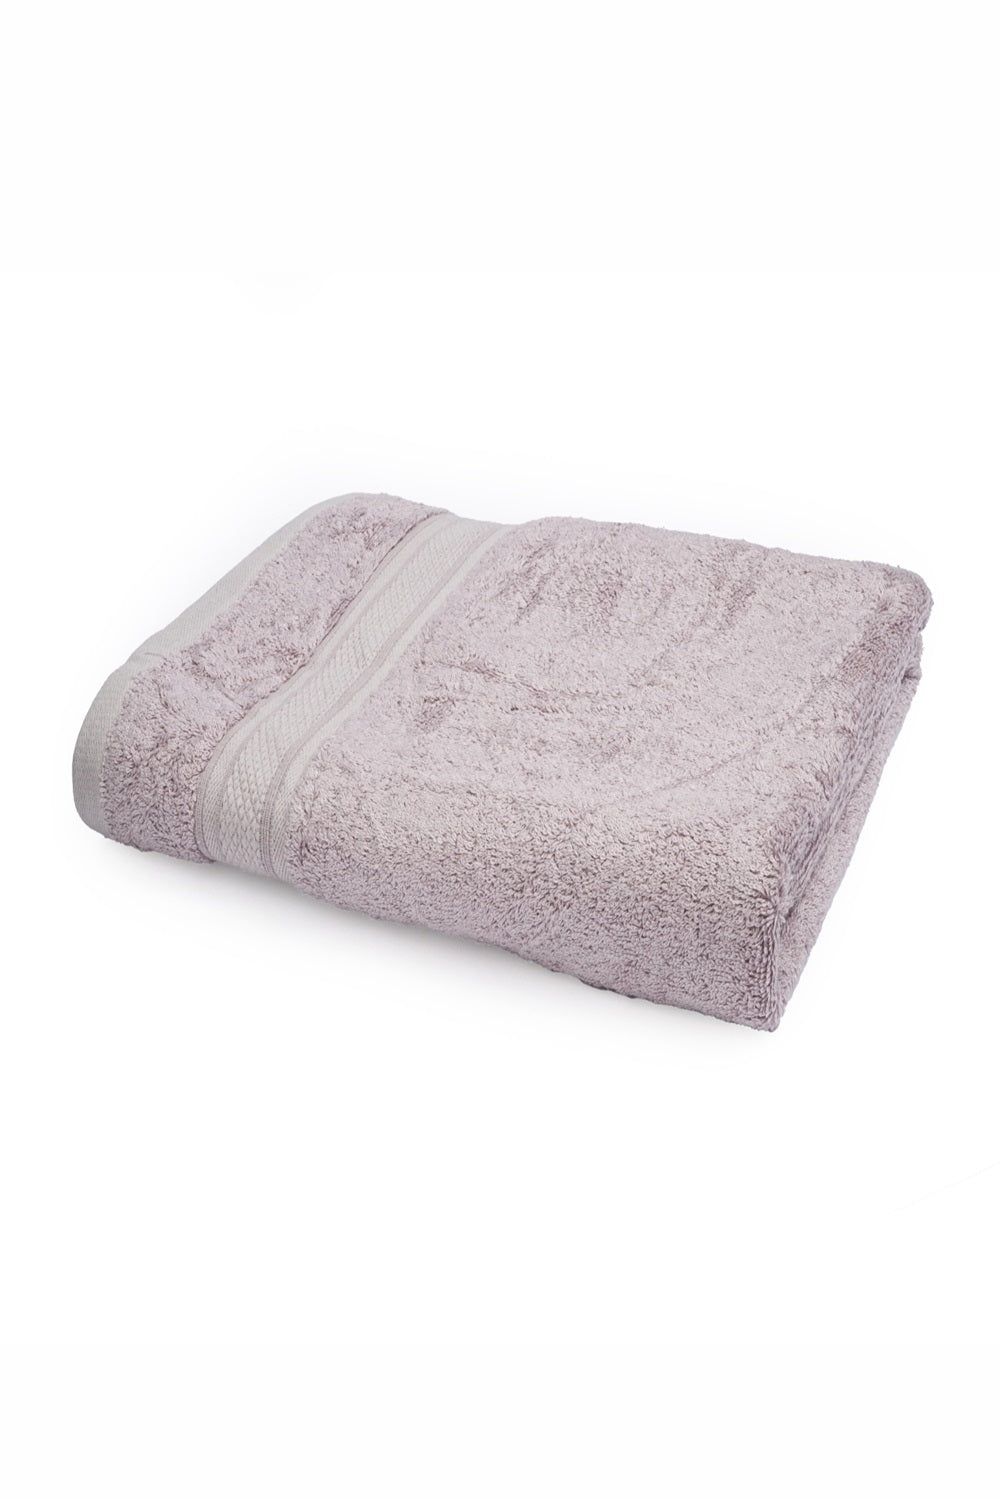 The Karira Collection - Bamboo Cotton Bath Towel (Grape Grey)